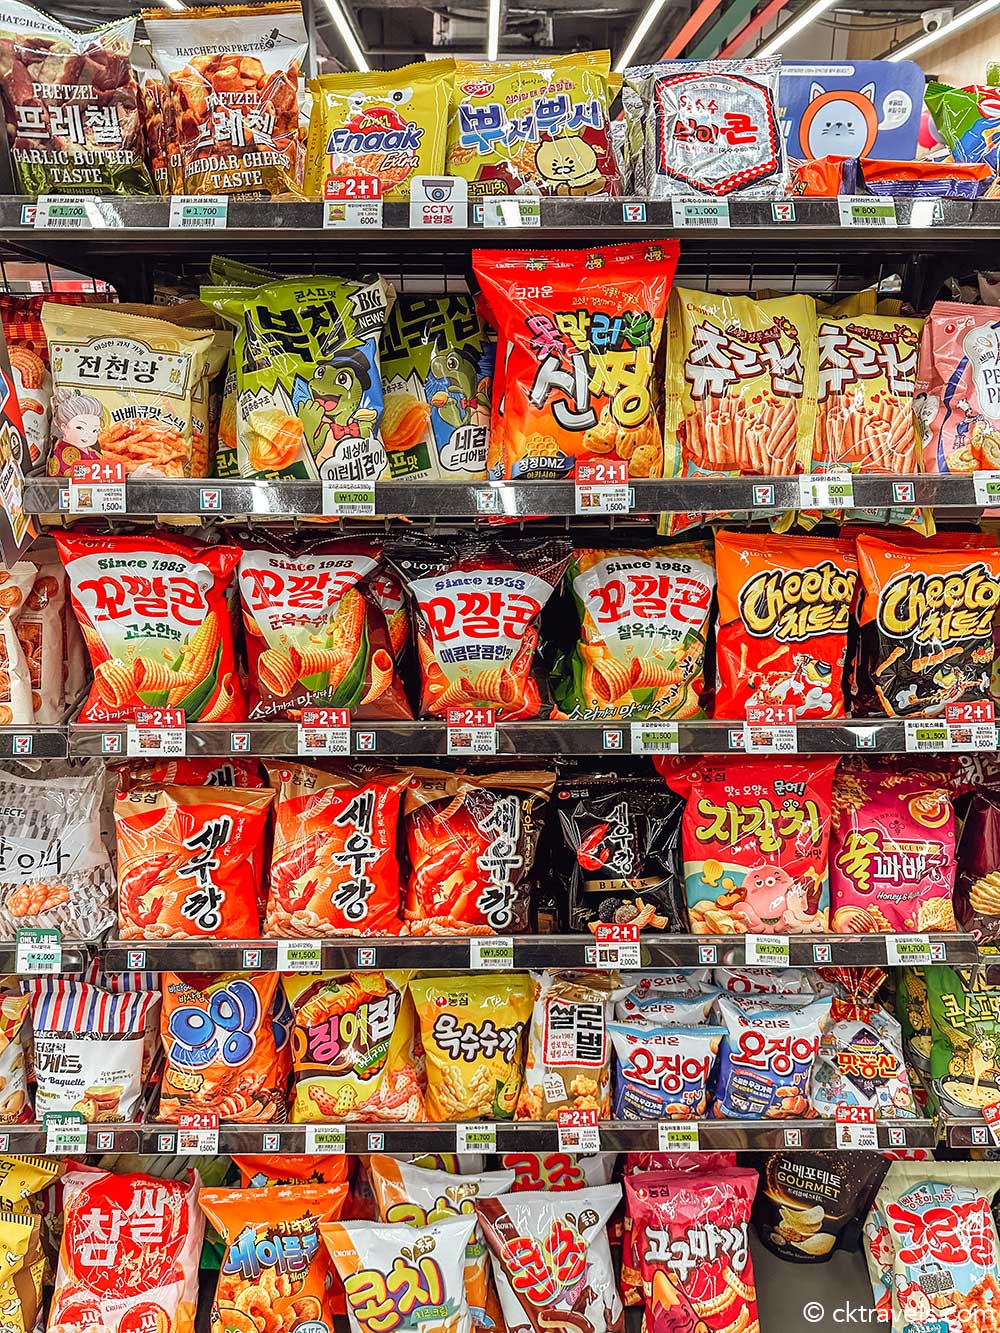 7-Eleven in South Korea | crisps, potato chips